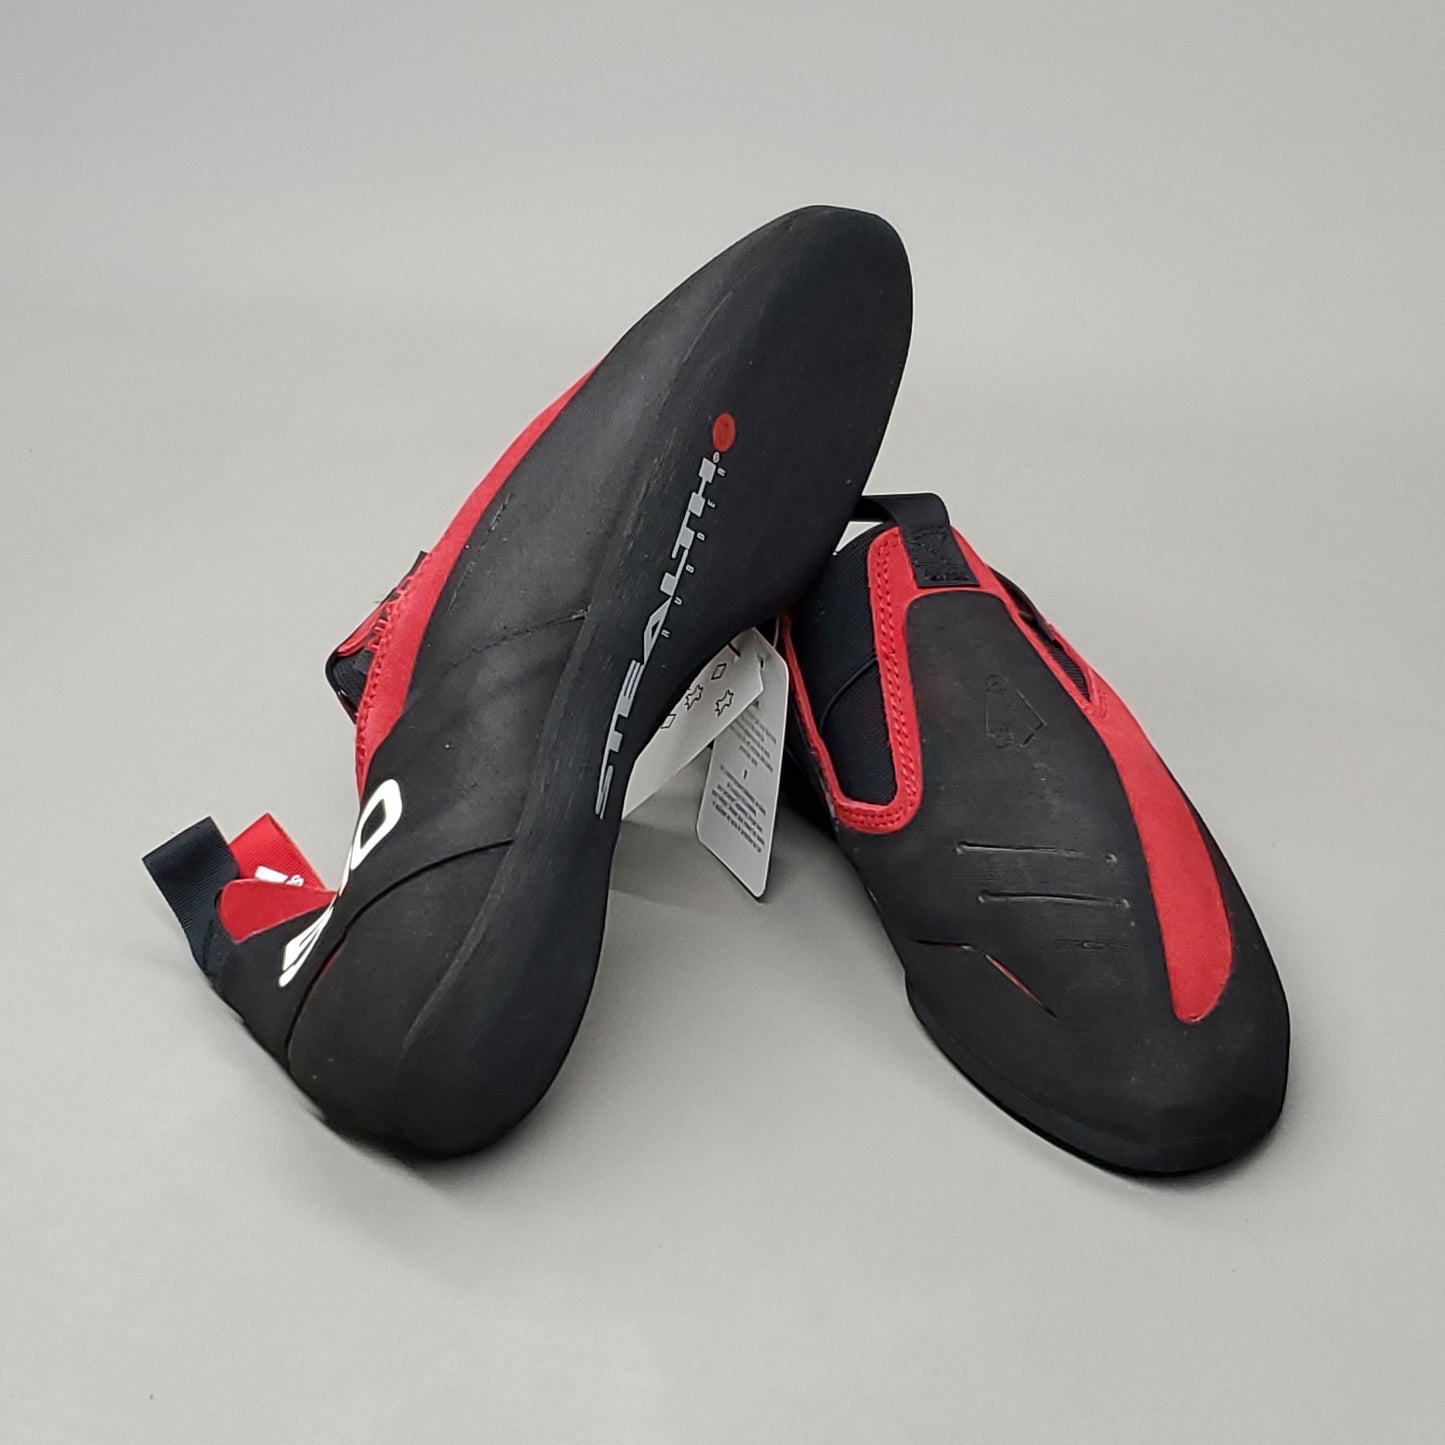 ADIDAS Five Ten Niad Moccasym Slip On Climbing Shoes Men's Sz 6 Black/Red FW2853 (New)